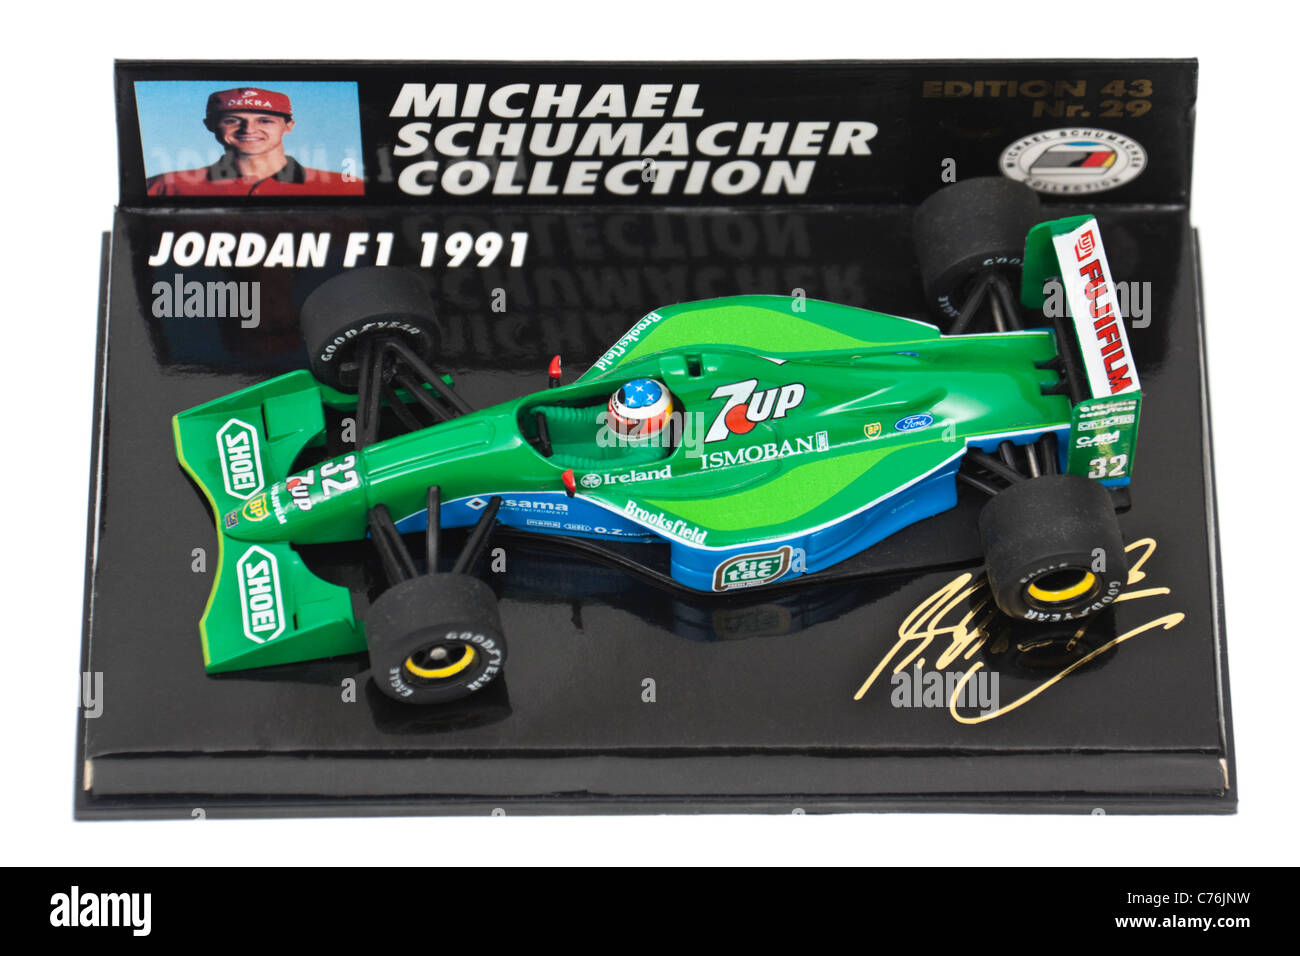 1991 Jordan F1 Racing Car (Michael Schumacher's first Formula One racing car), 1:43 scale model Stock Photo